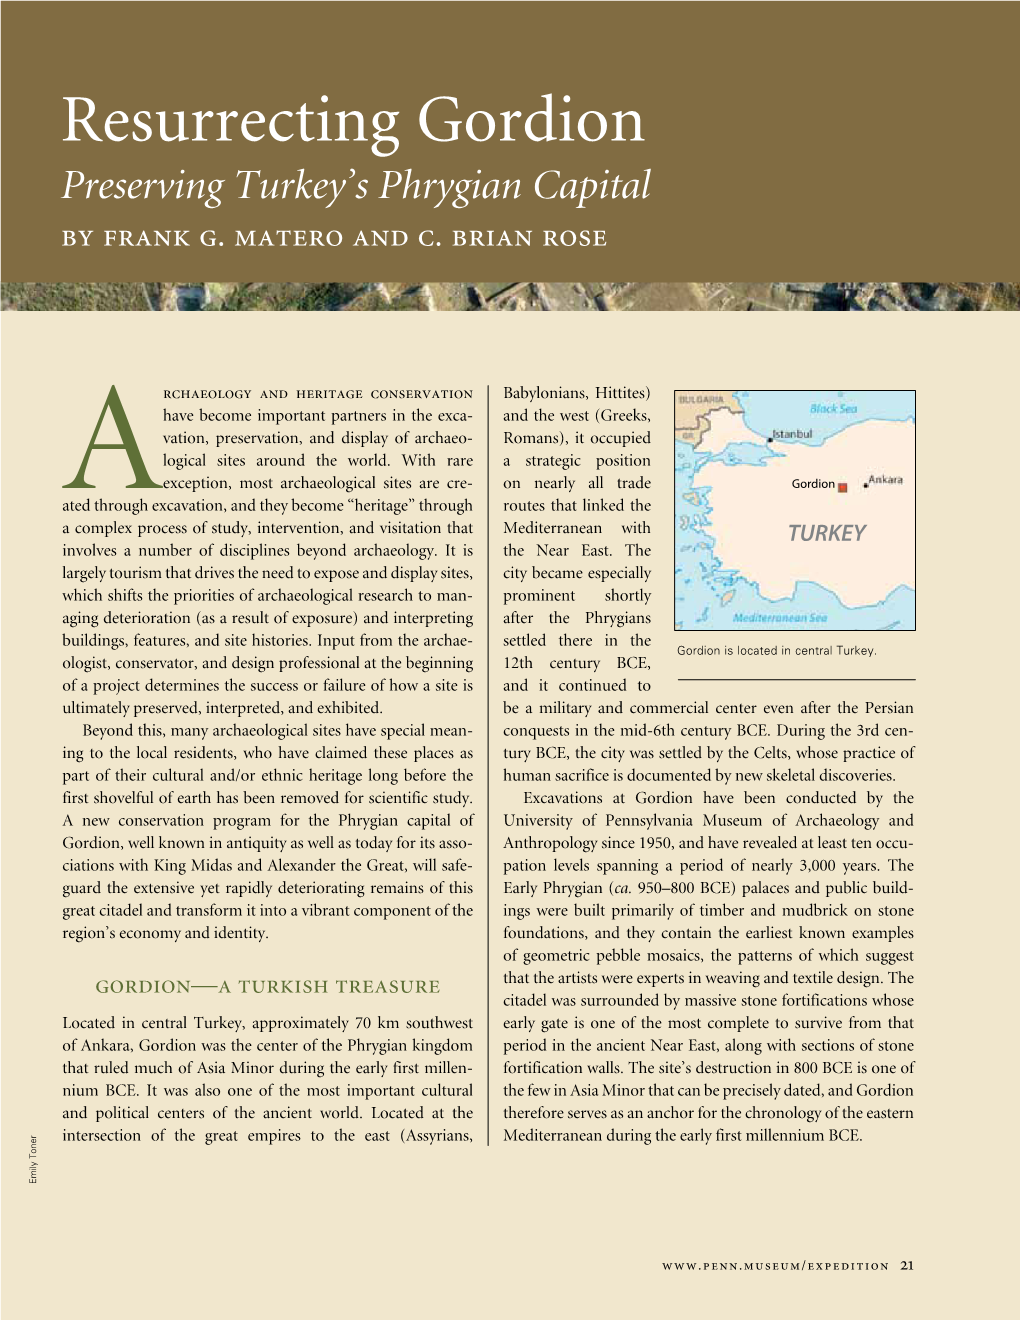 Resurrecting Gordion Preserving Turkey’S Phrygian Capital by Frank G